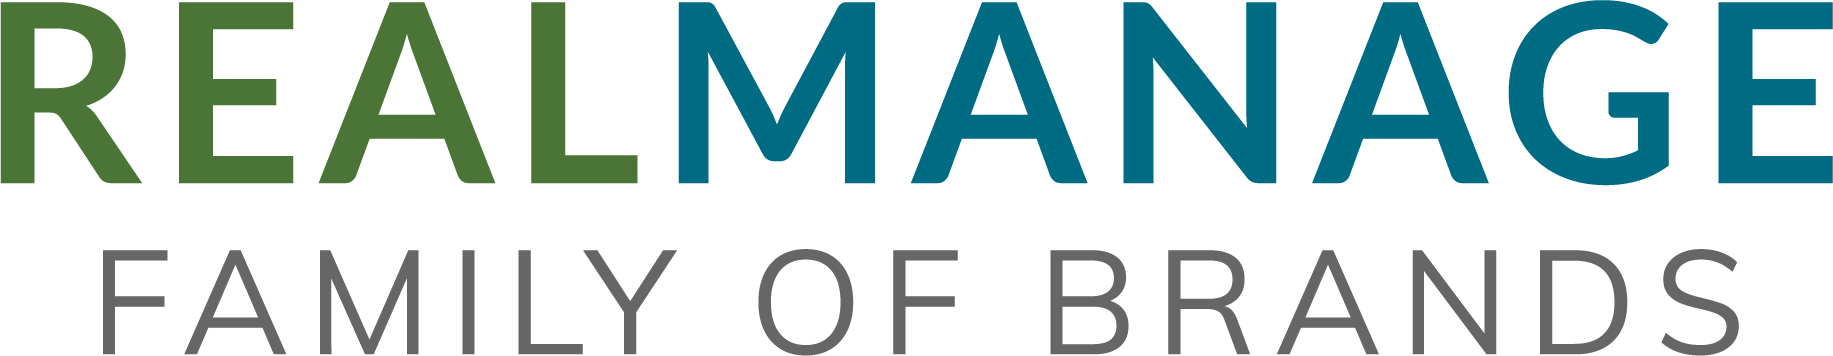 RealManage Family of Brands - Sarasota logo